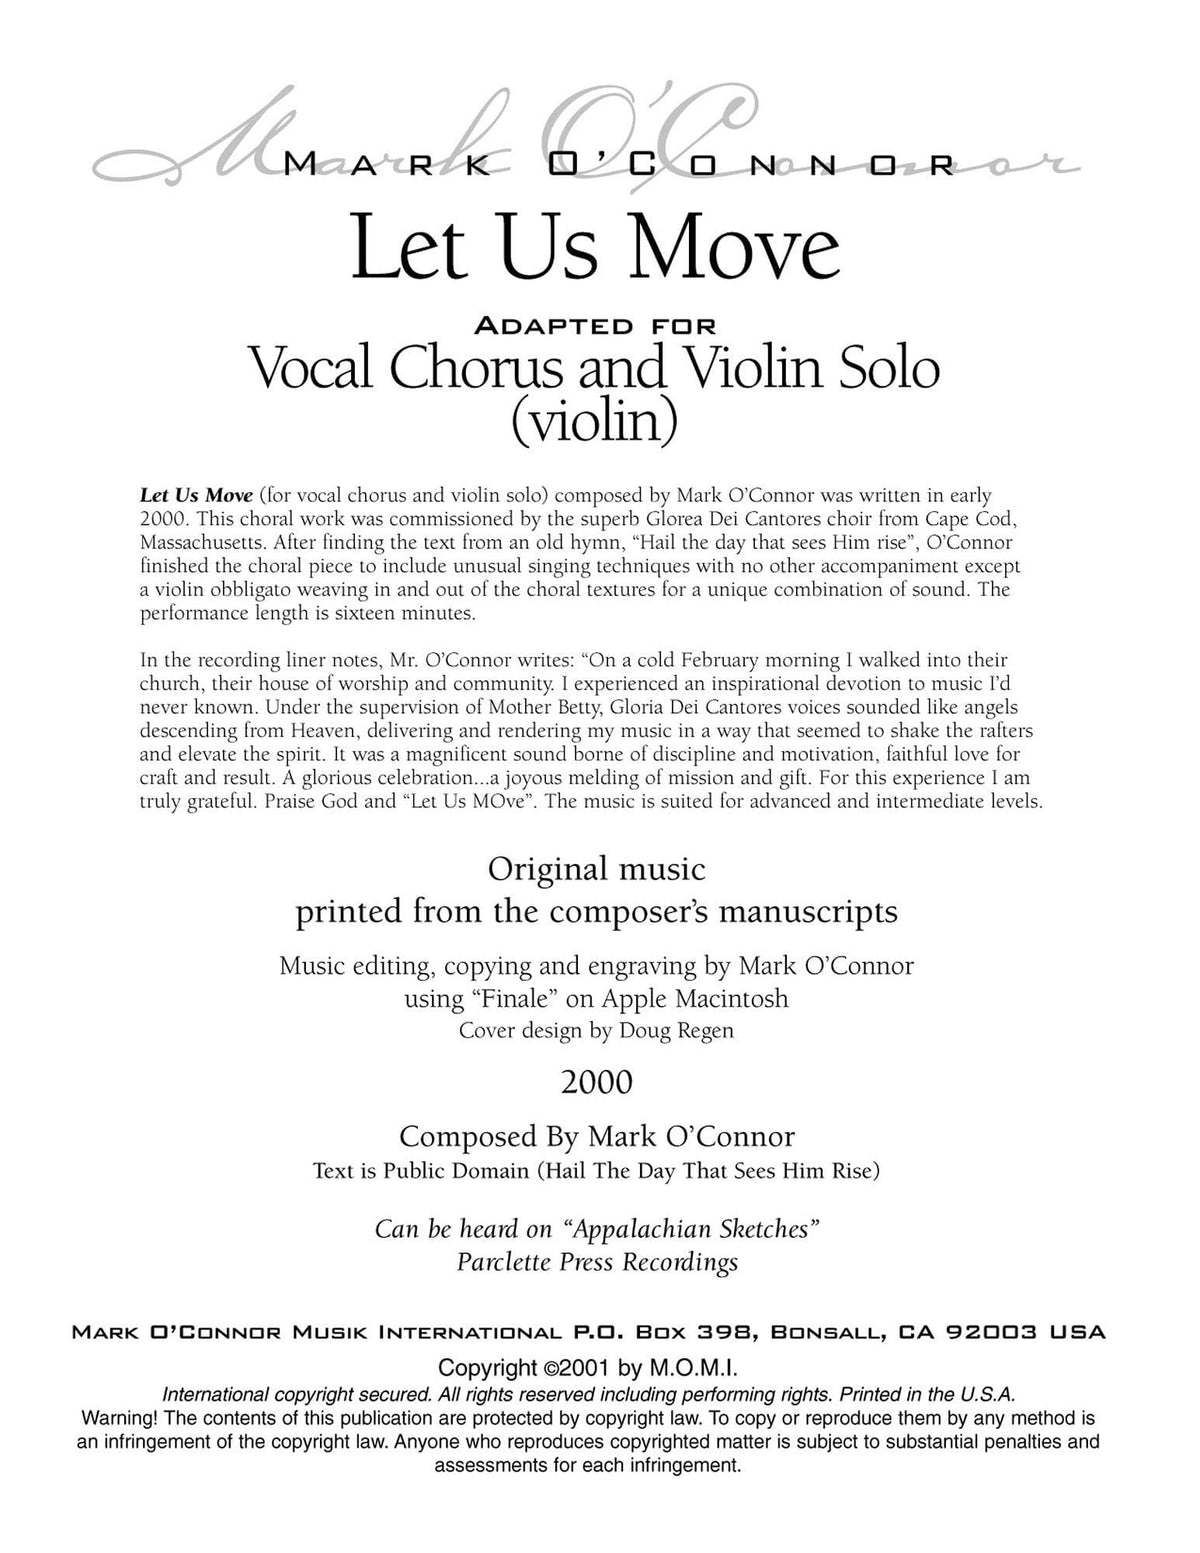 O'Connor, Mark - Let Us Move for Choir and Violin - Violin - Digital Download